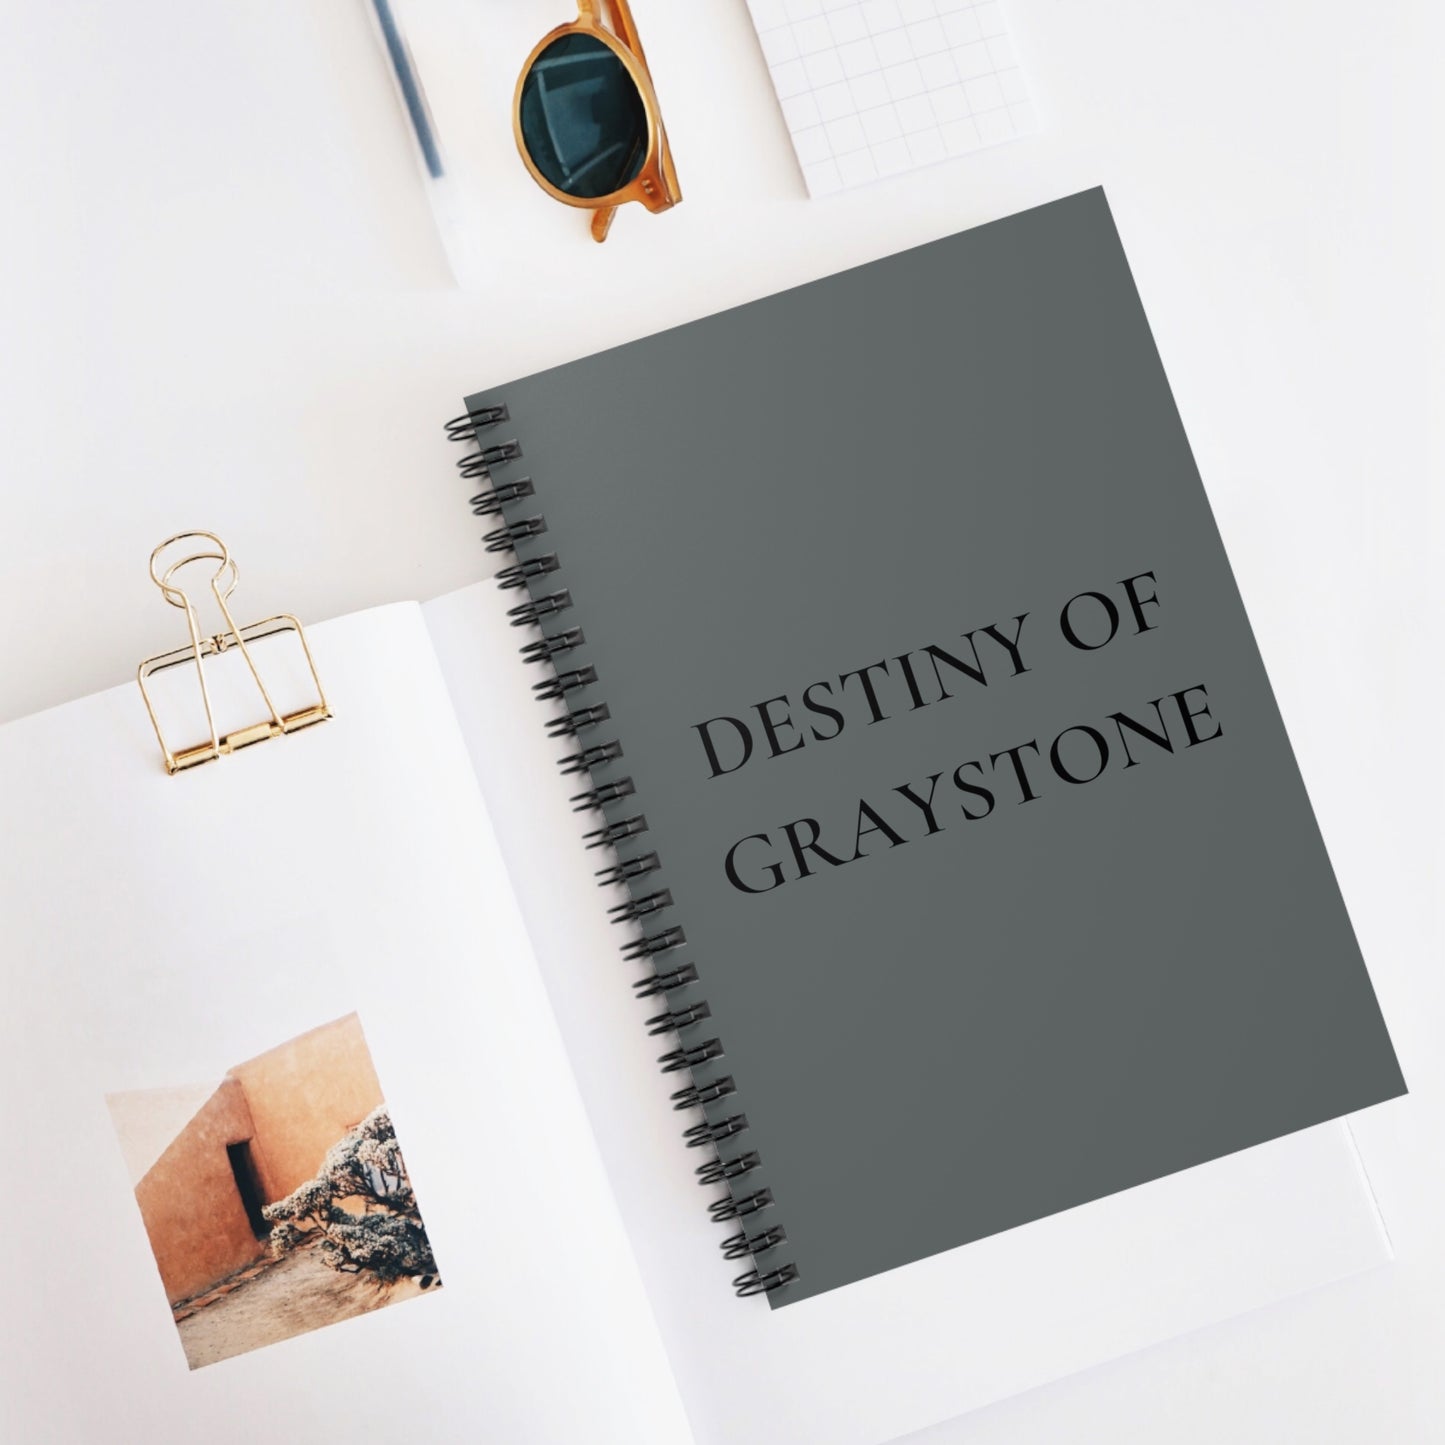 Destiny Of Graystone Spiral Notebook - Ruled Line